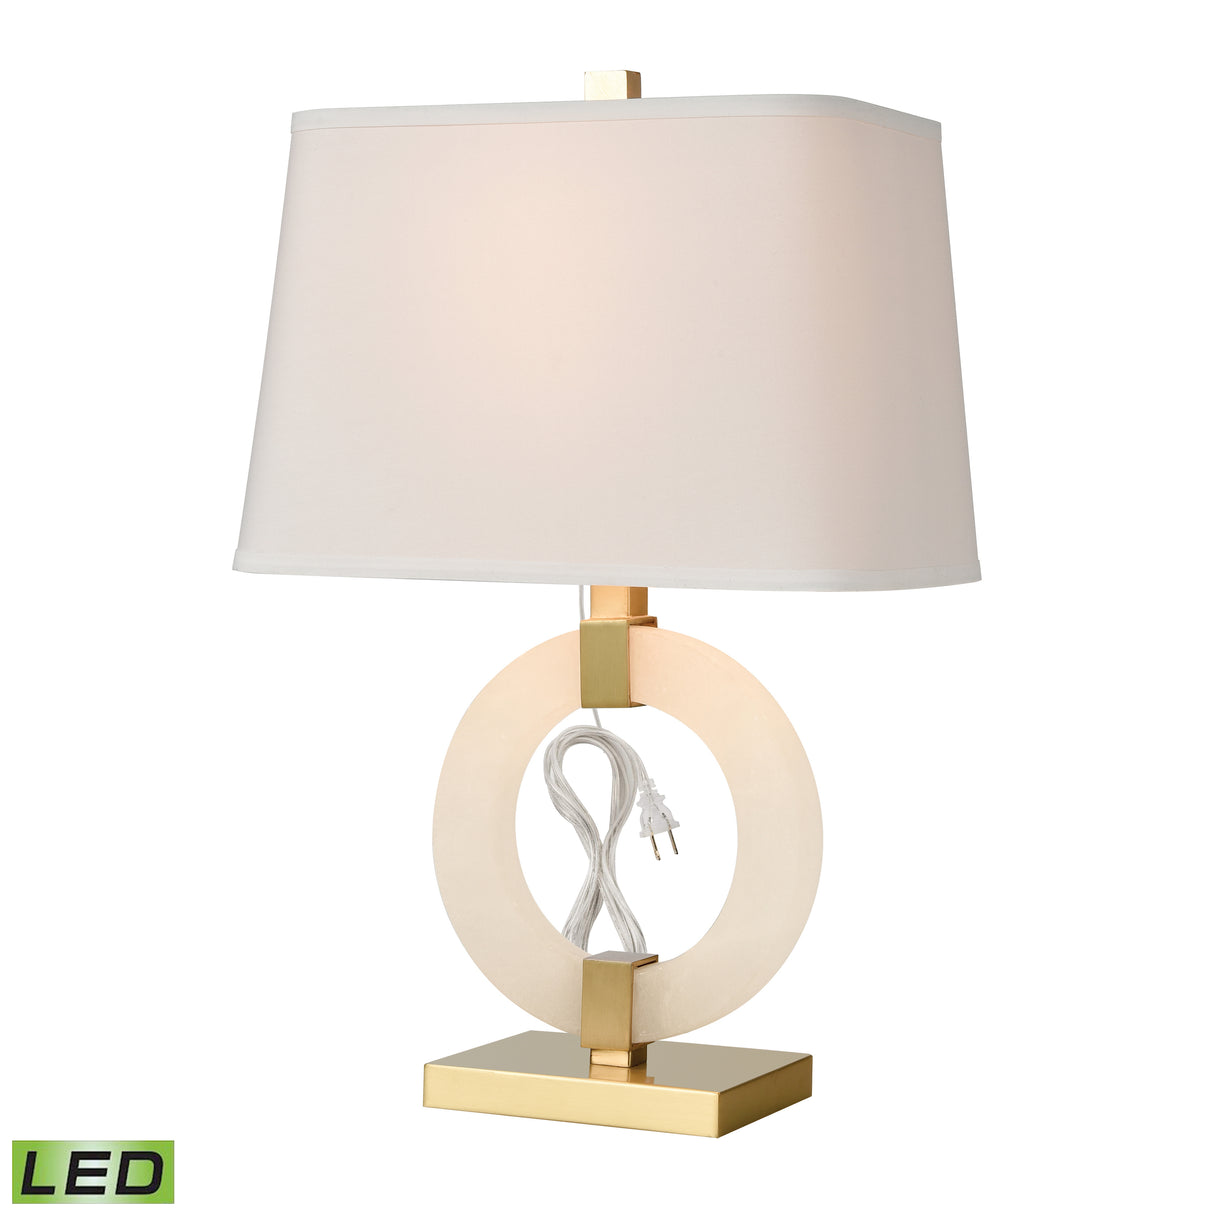 Elk D4523-LED Envrion 23'' High 1-Light Table Lamp - Honey Brass - Includes LED Bulb